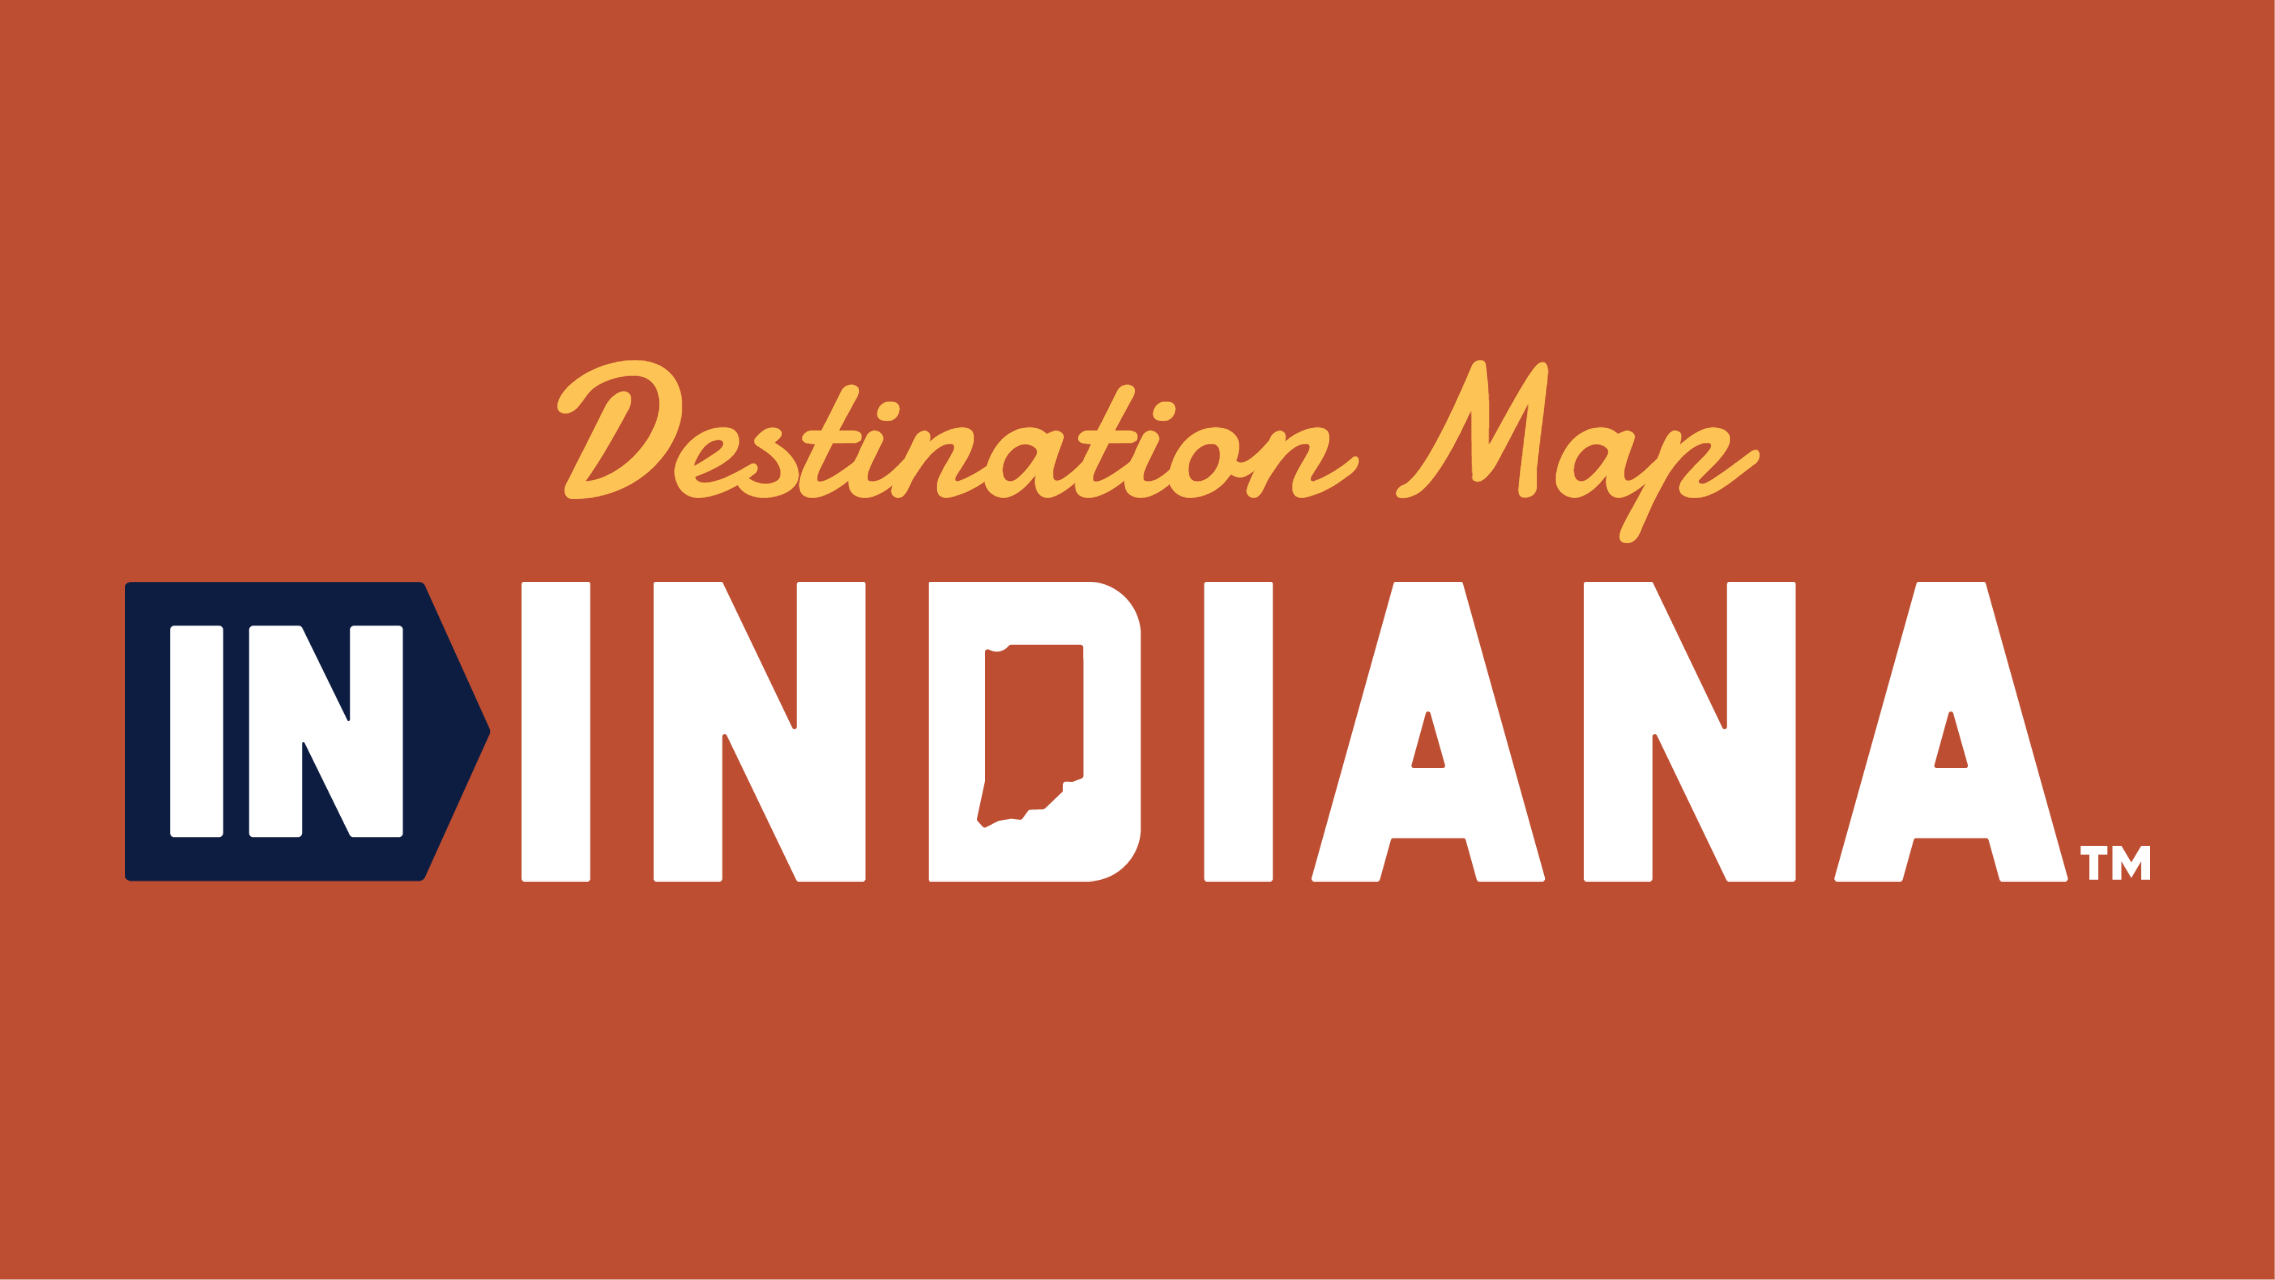 visitindiana.com/move-in/destination-map